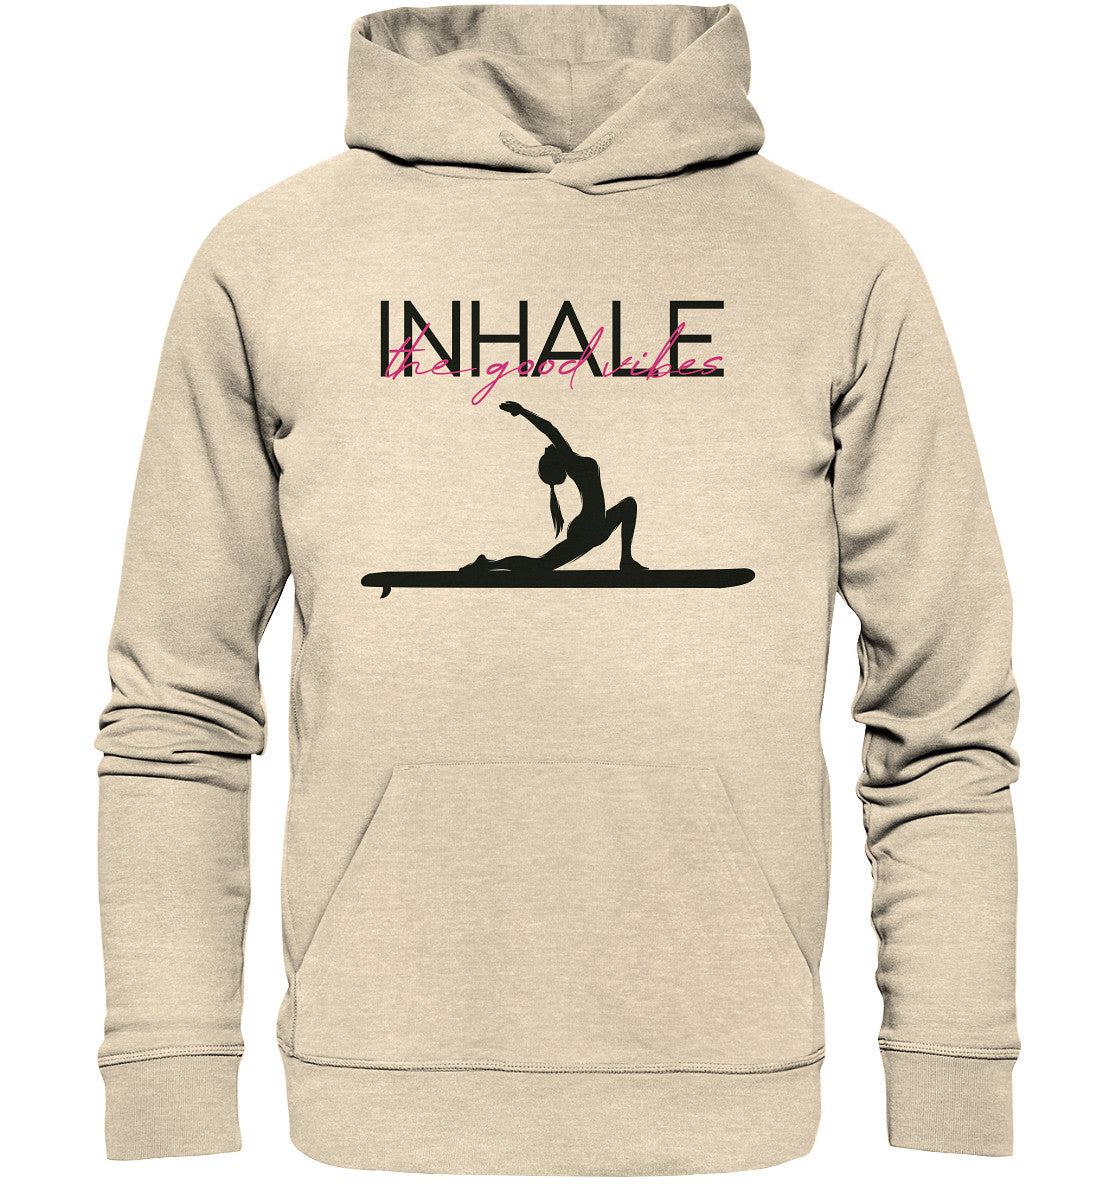 SUP Yoga-INHALE the good vibes - Organic Hoodie